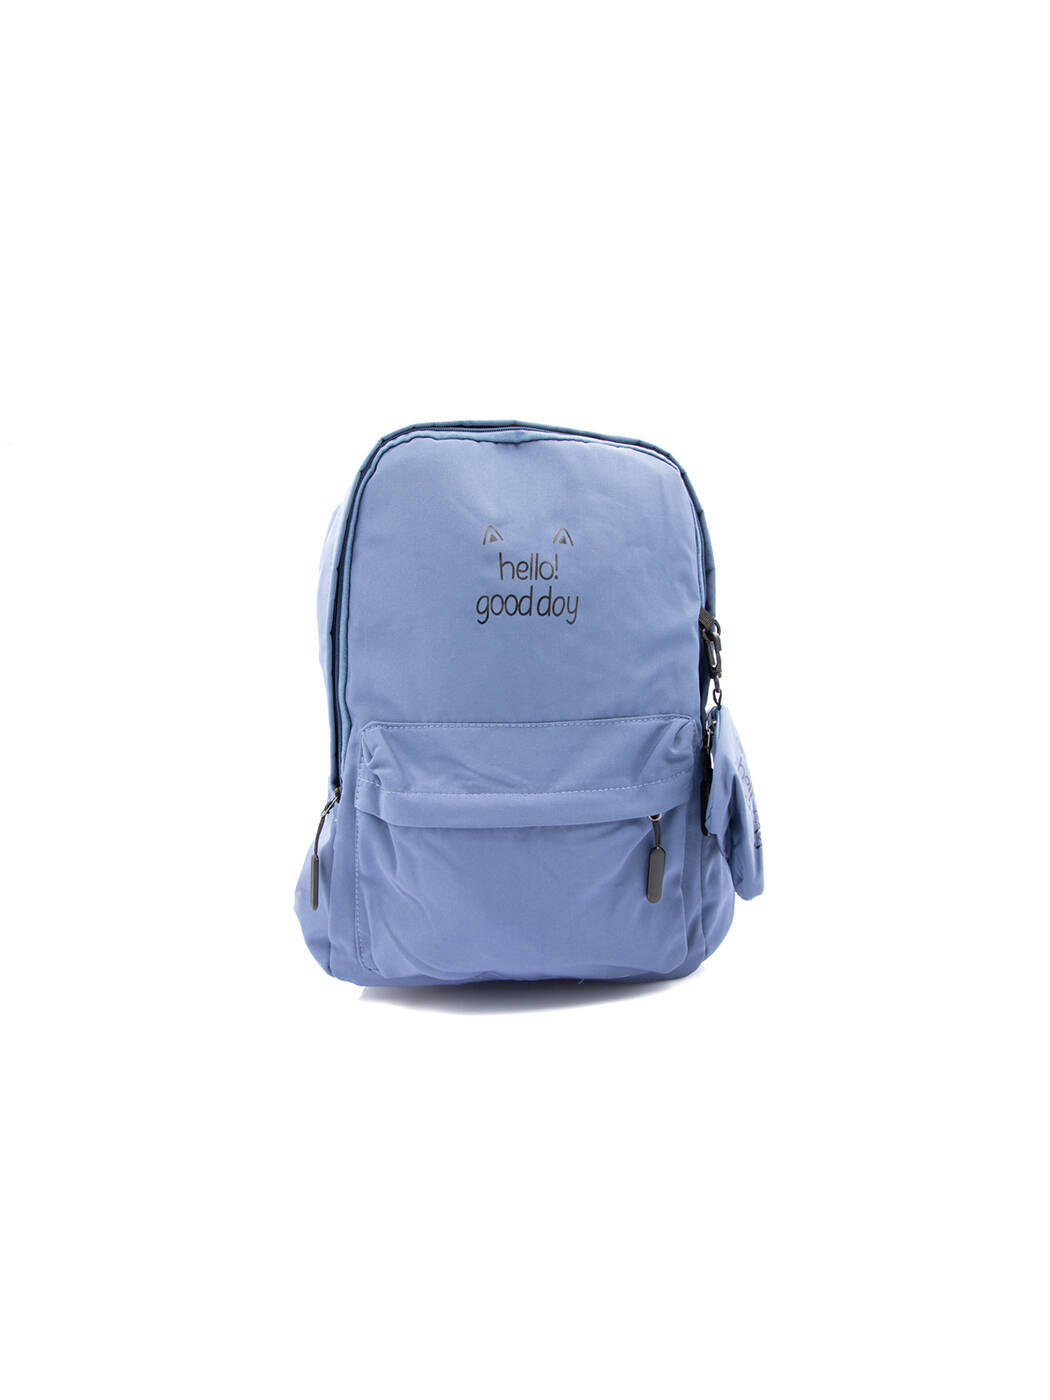 Рюкзак спортивный синий 03-blue_M